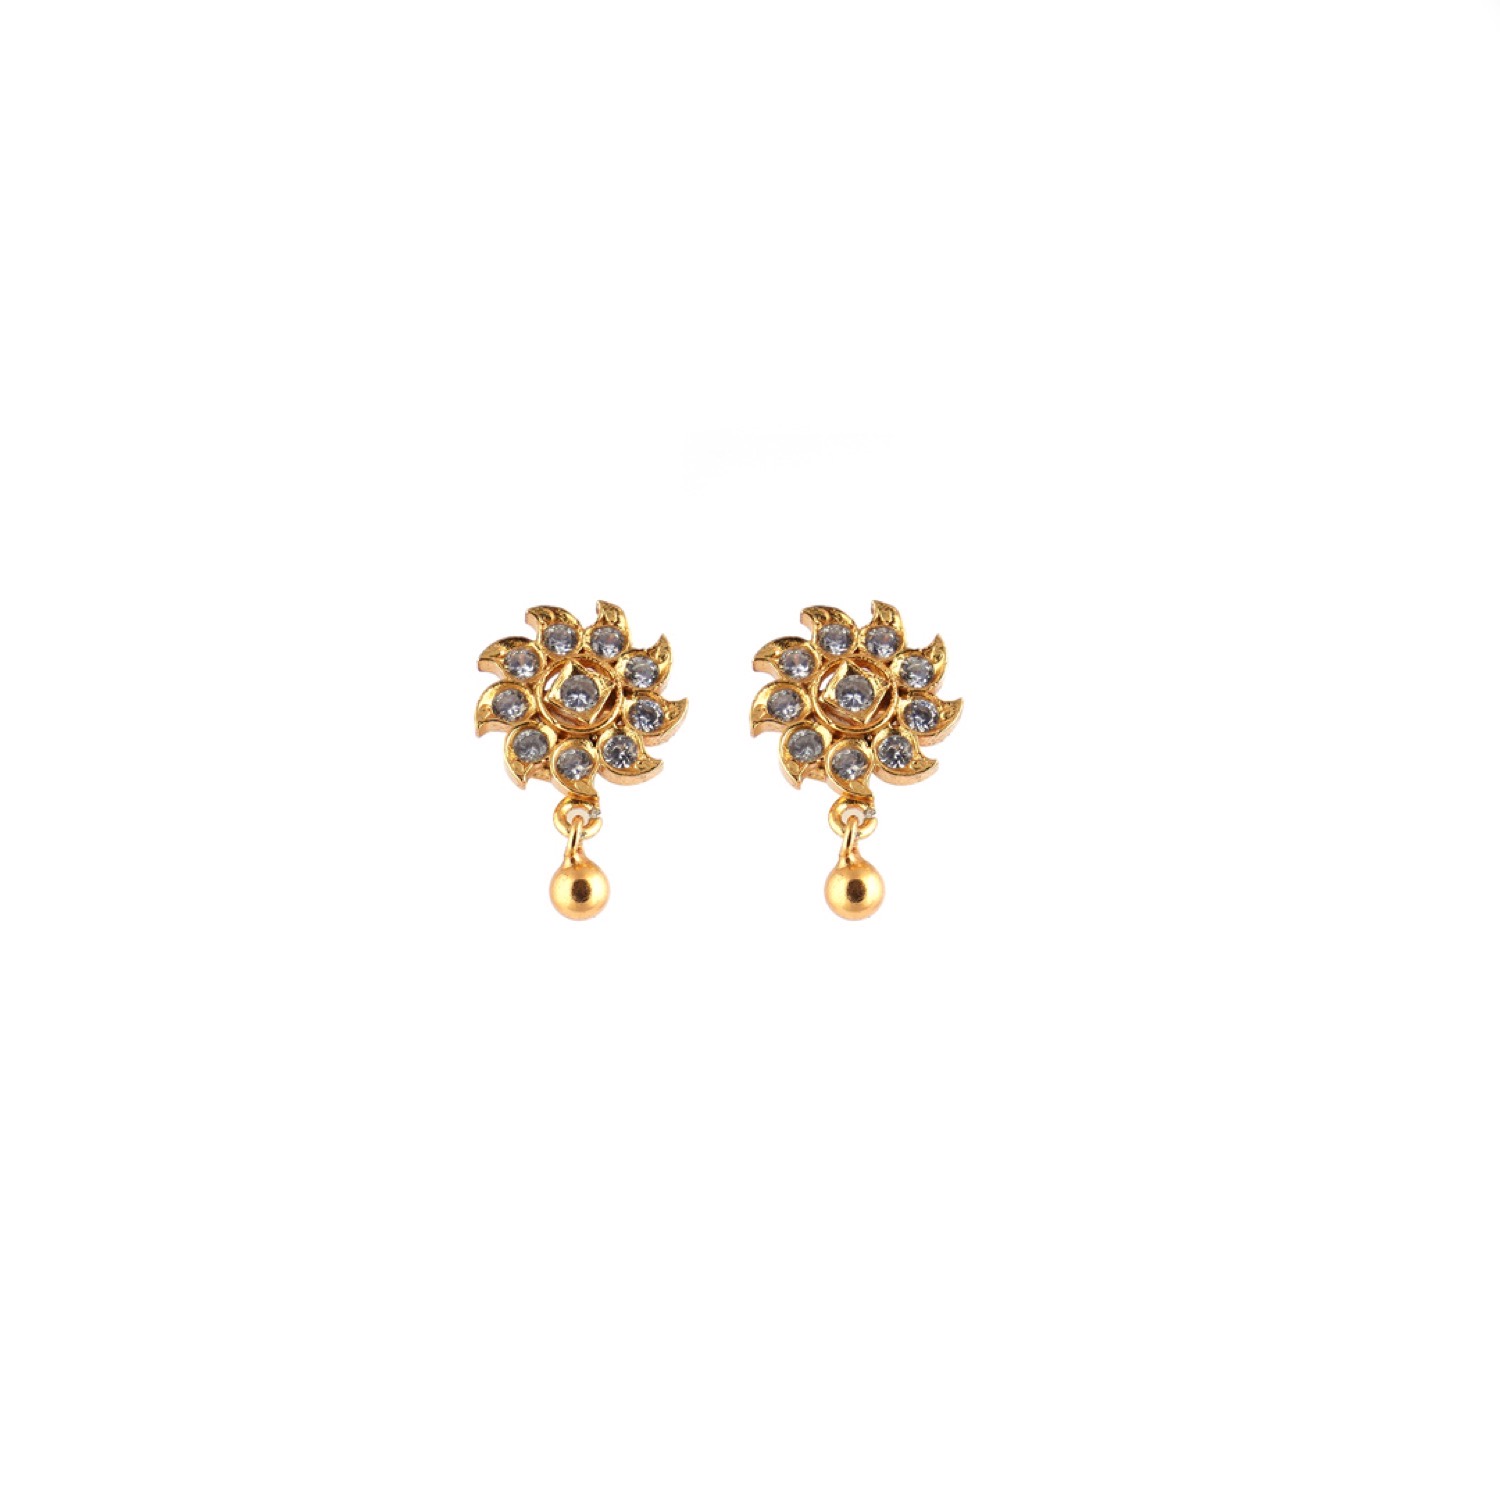 varam_earrings_102022_swirl_flower_white_stone_with_gold_drop_gold_coated_silver_earrings-1